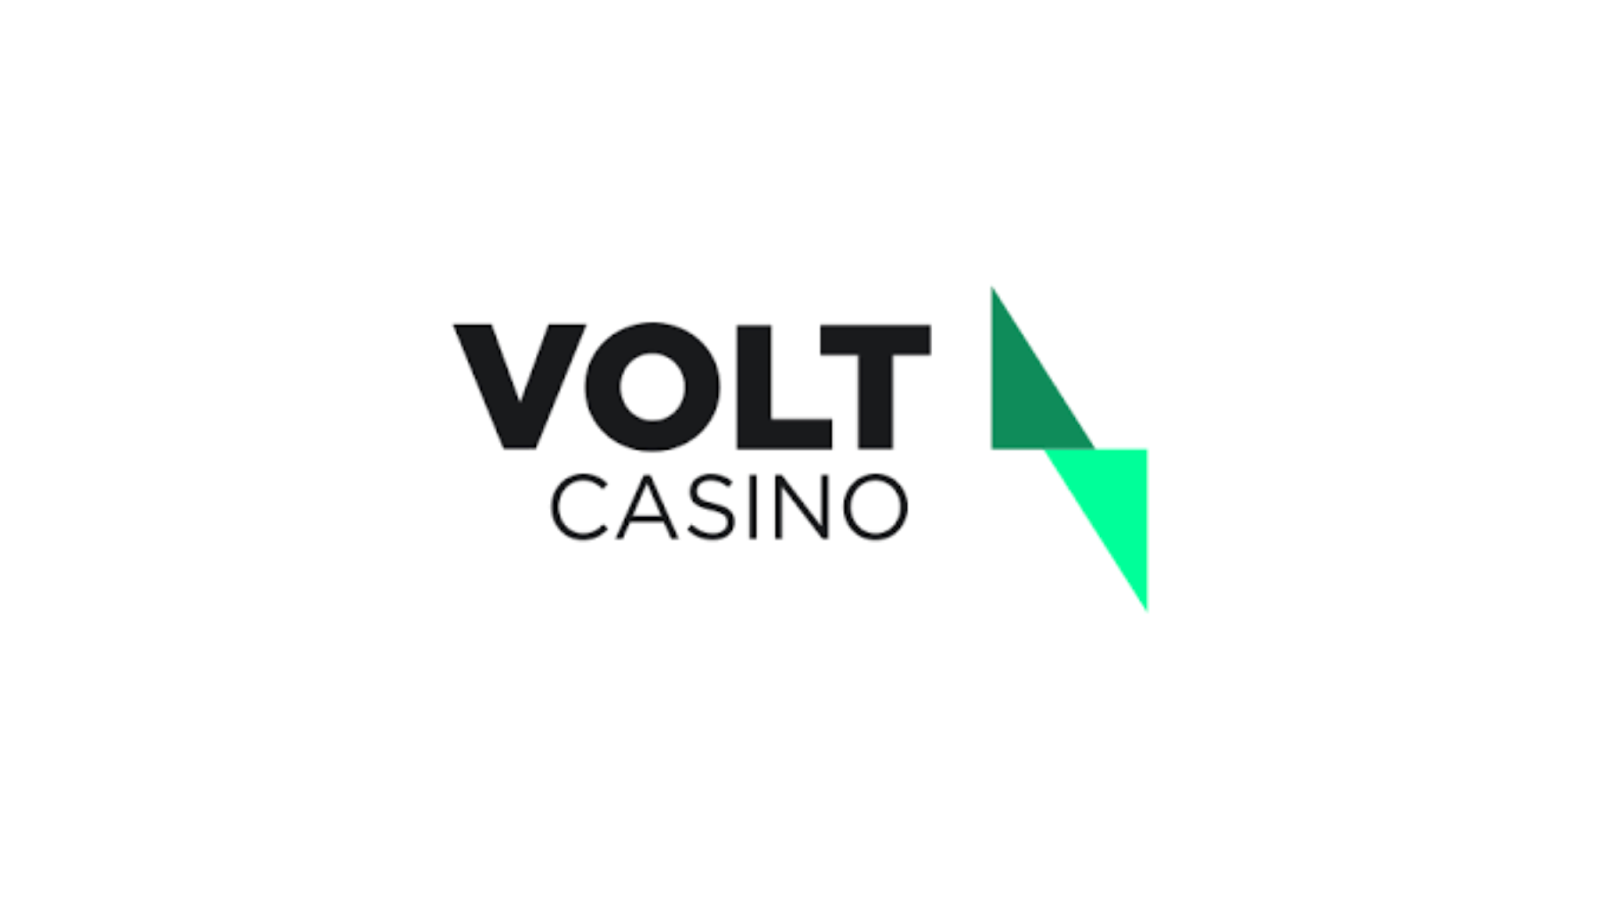 Volt casino review